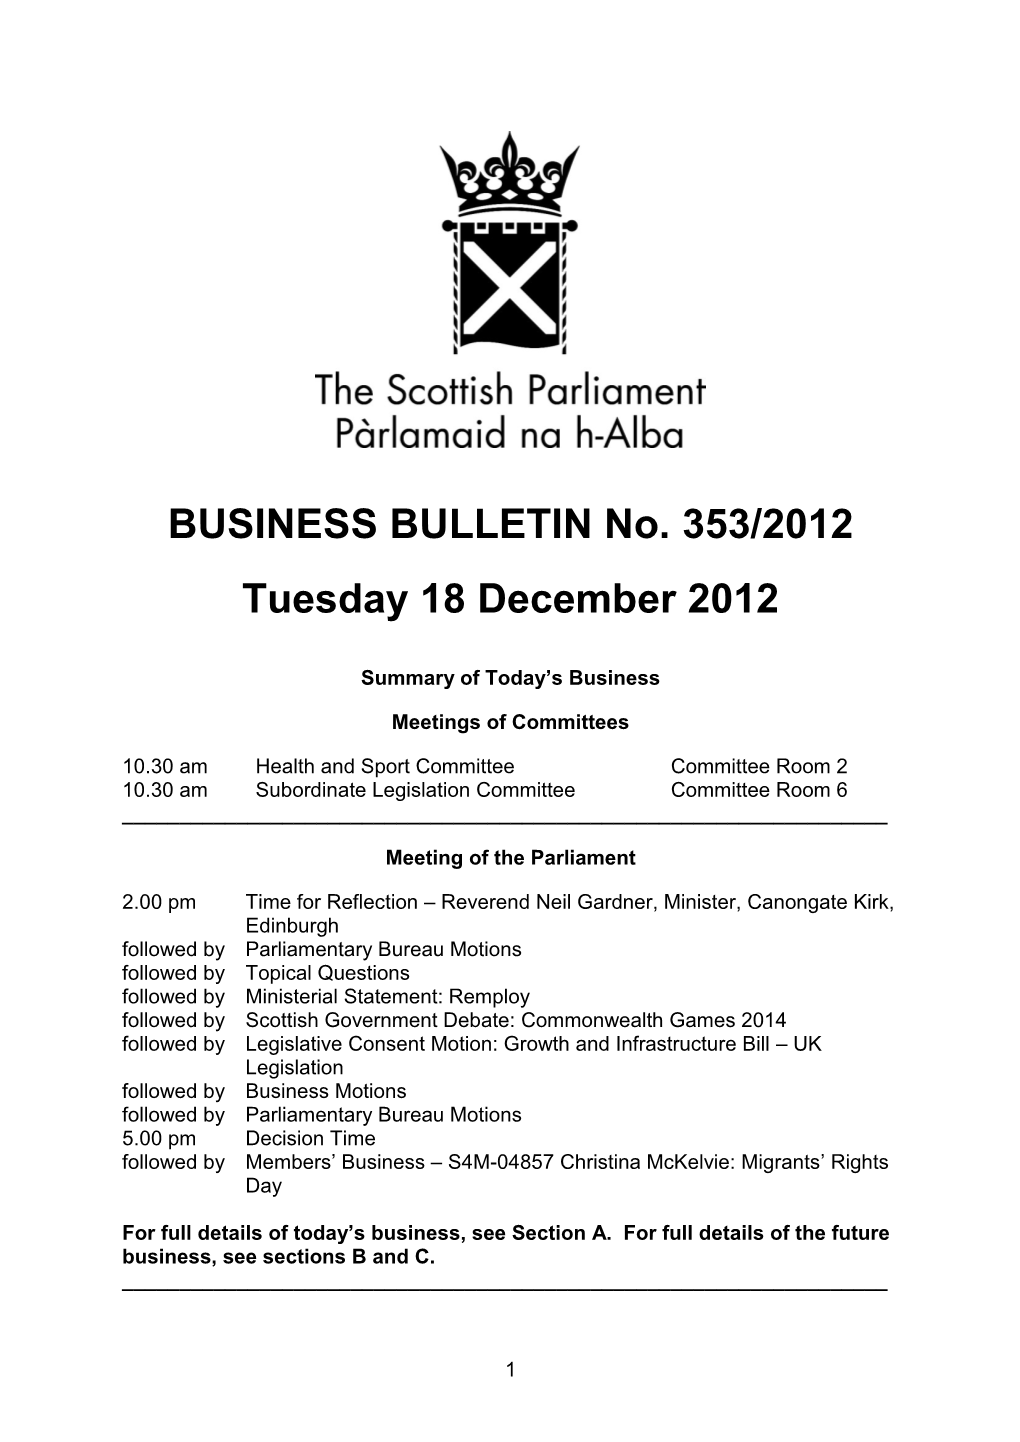 BUSINESS BULLETIN No. 353/2012 Tuesday 18 December 2012